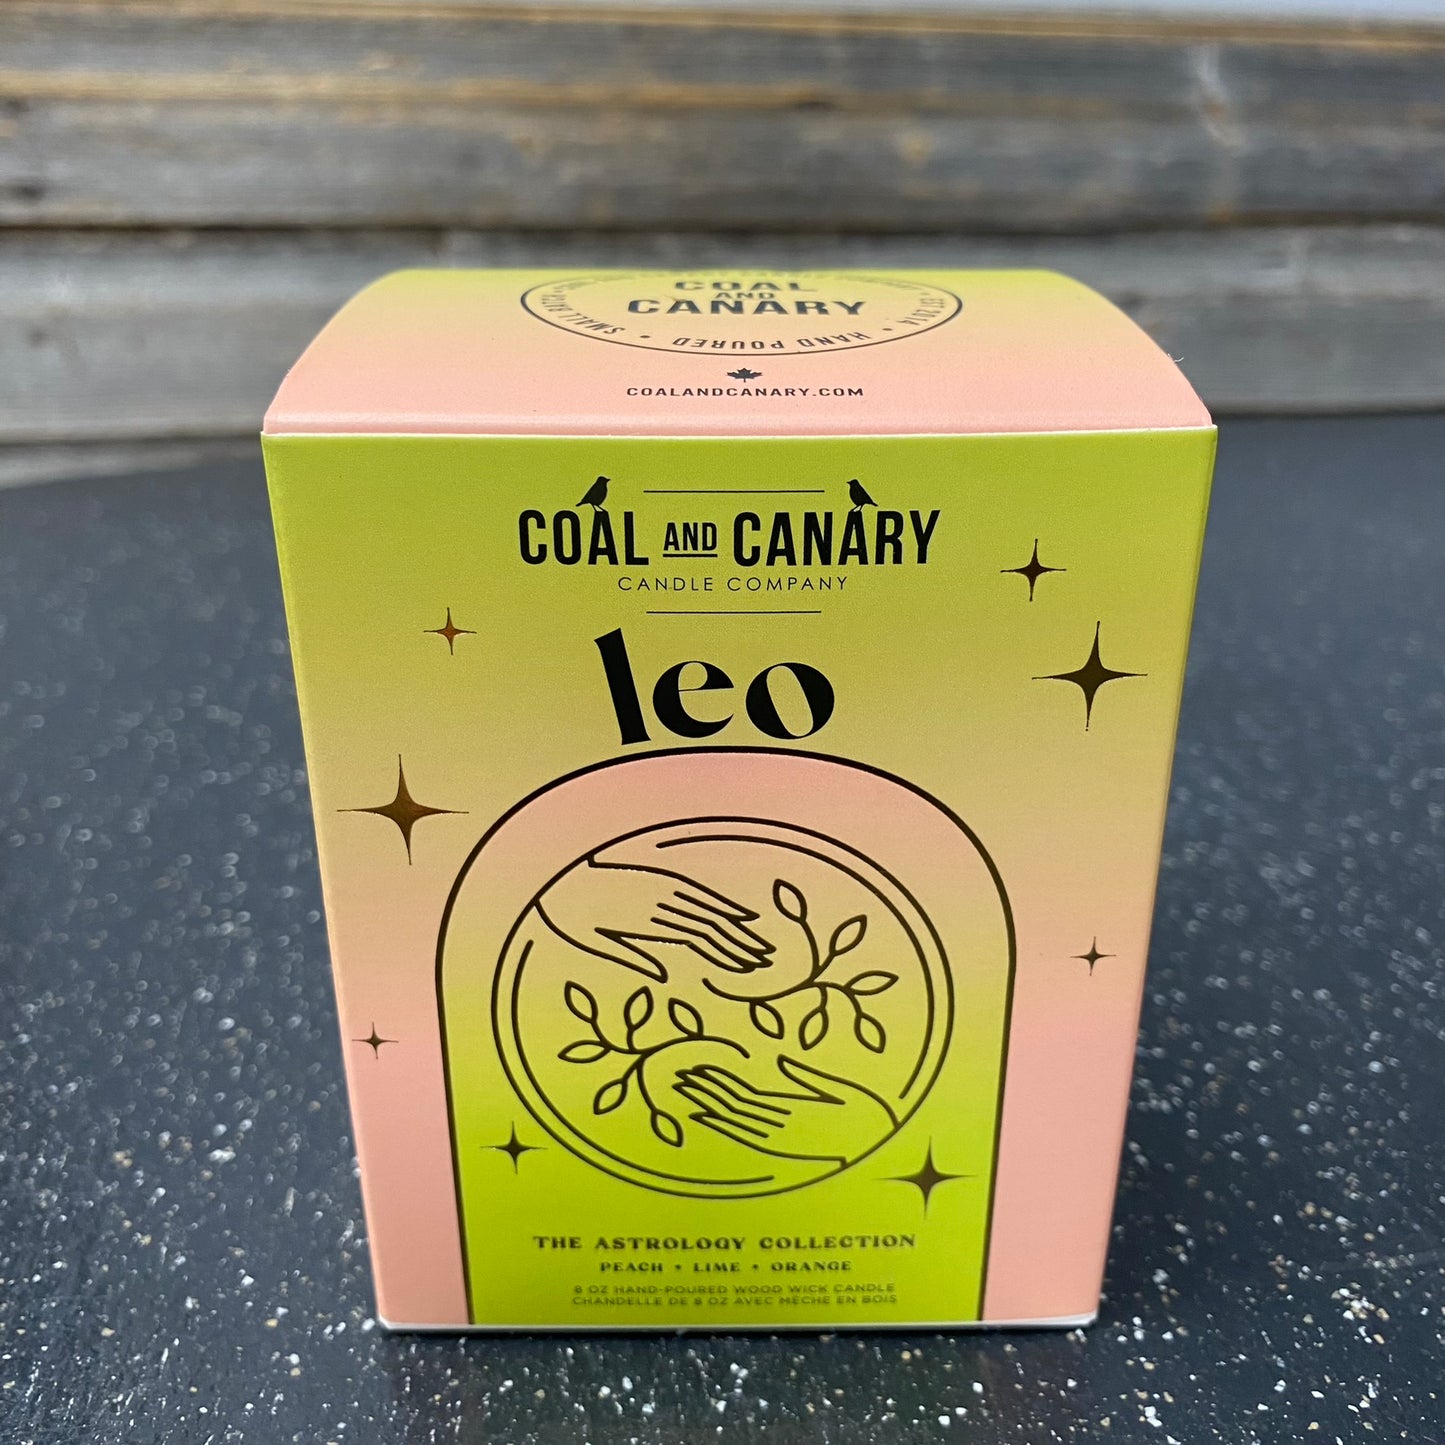 Leo by Coal & Canary